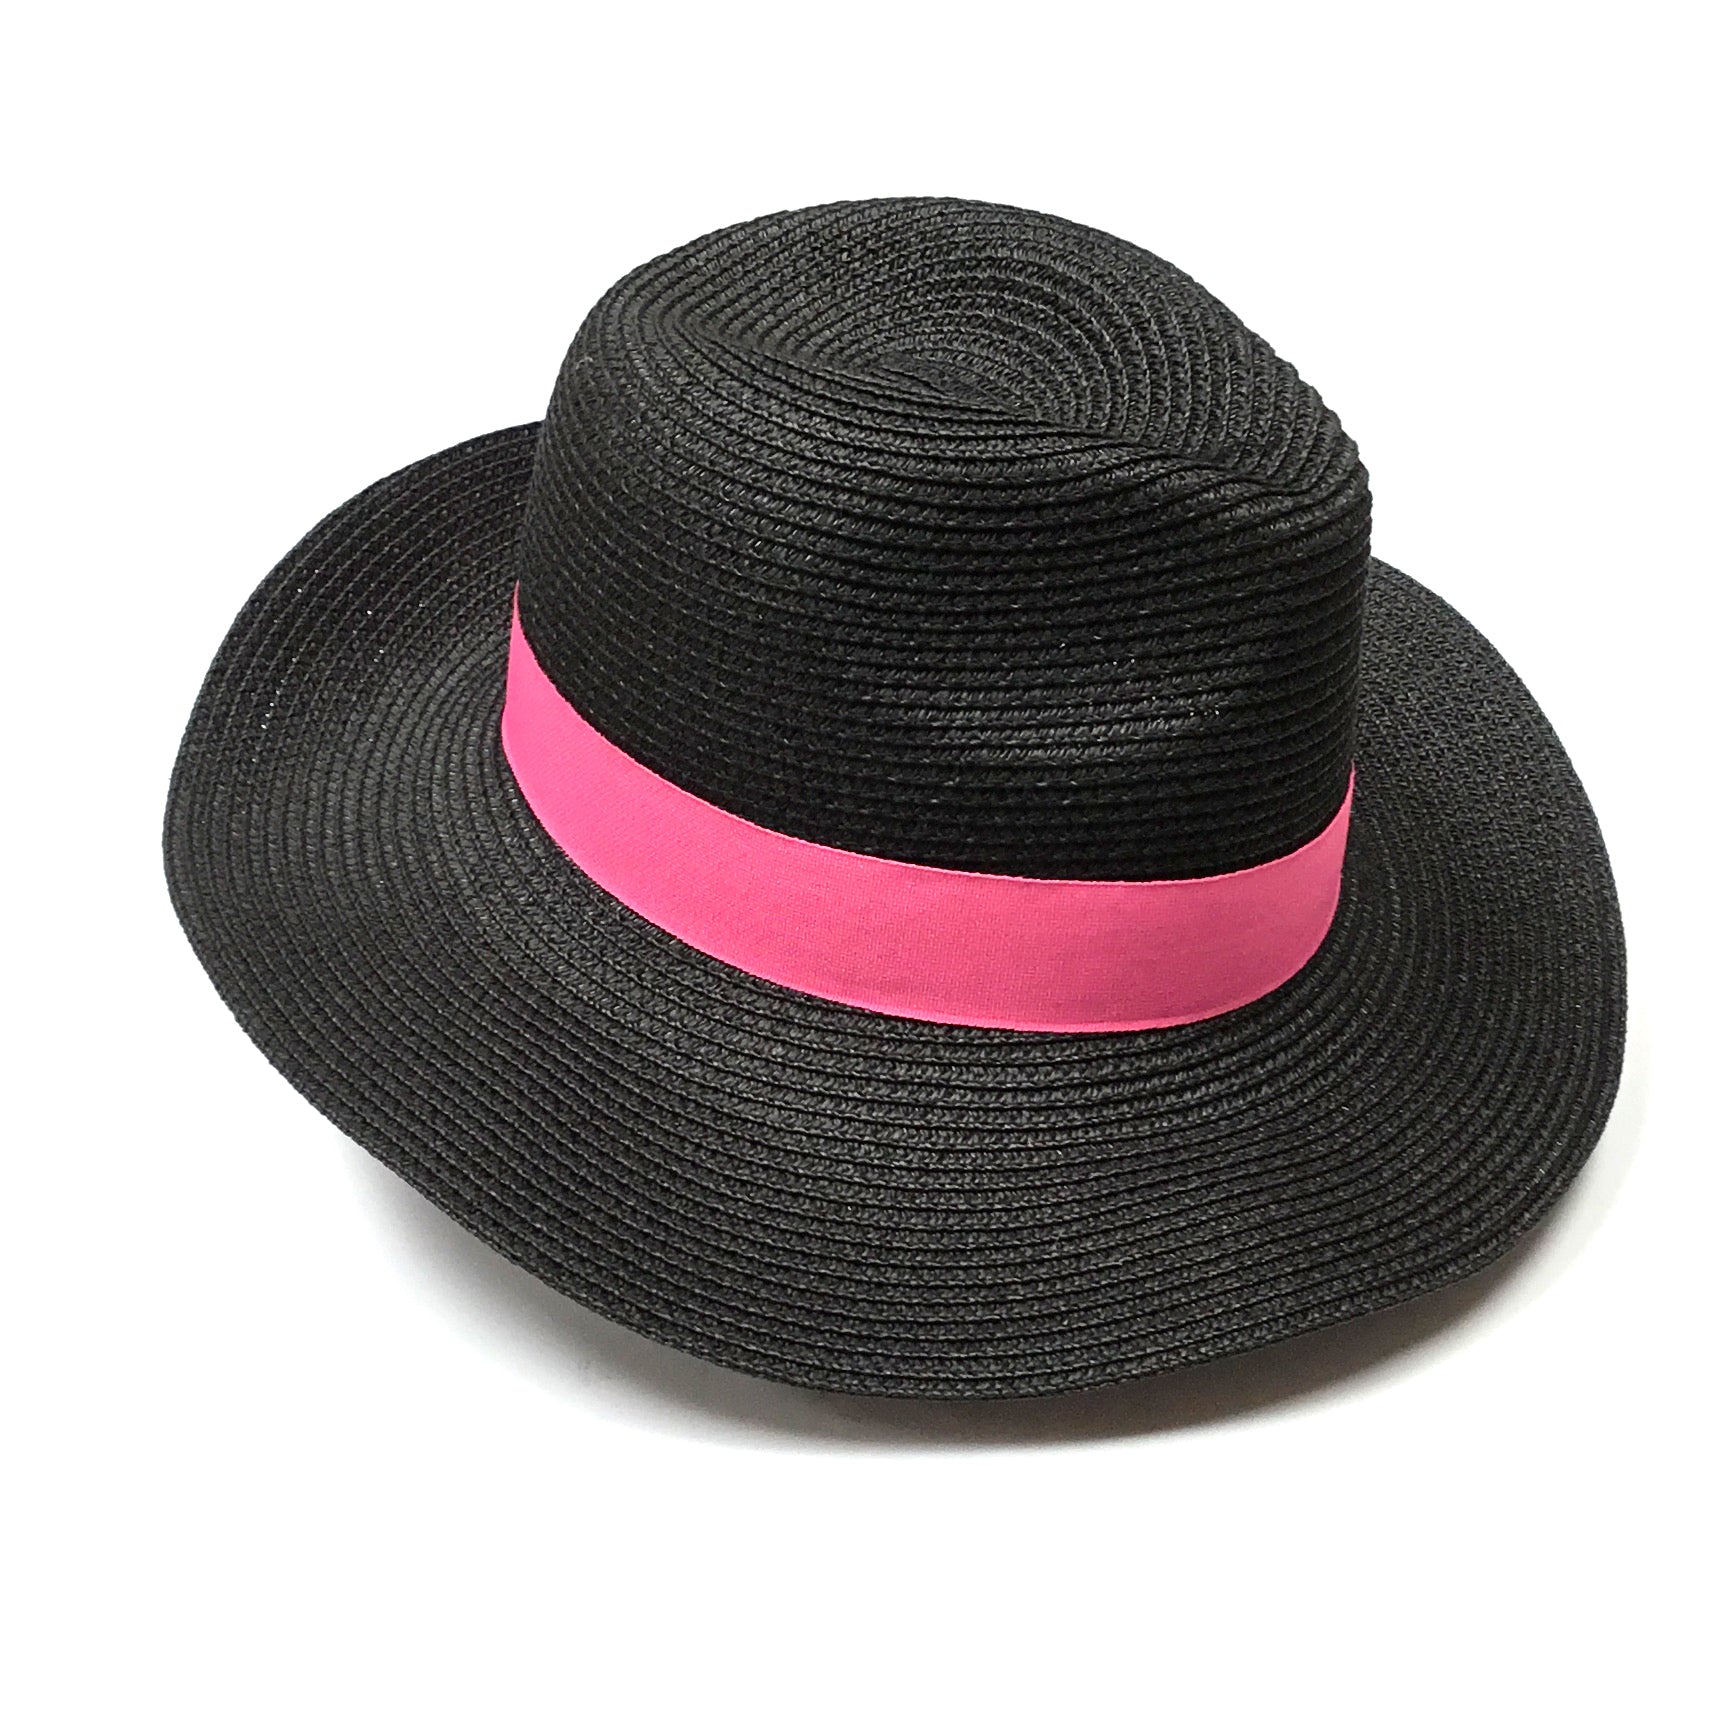 Folding Panama Style Travel Sun Hat - Black & Pink (57cm)